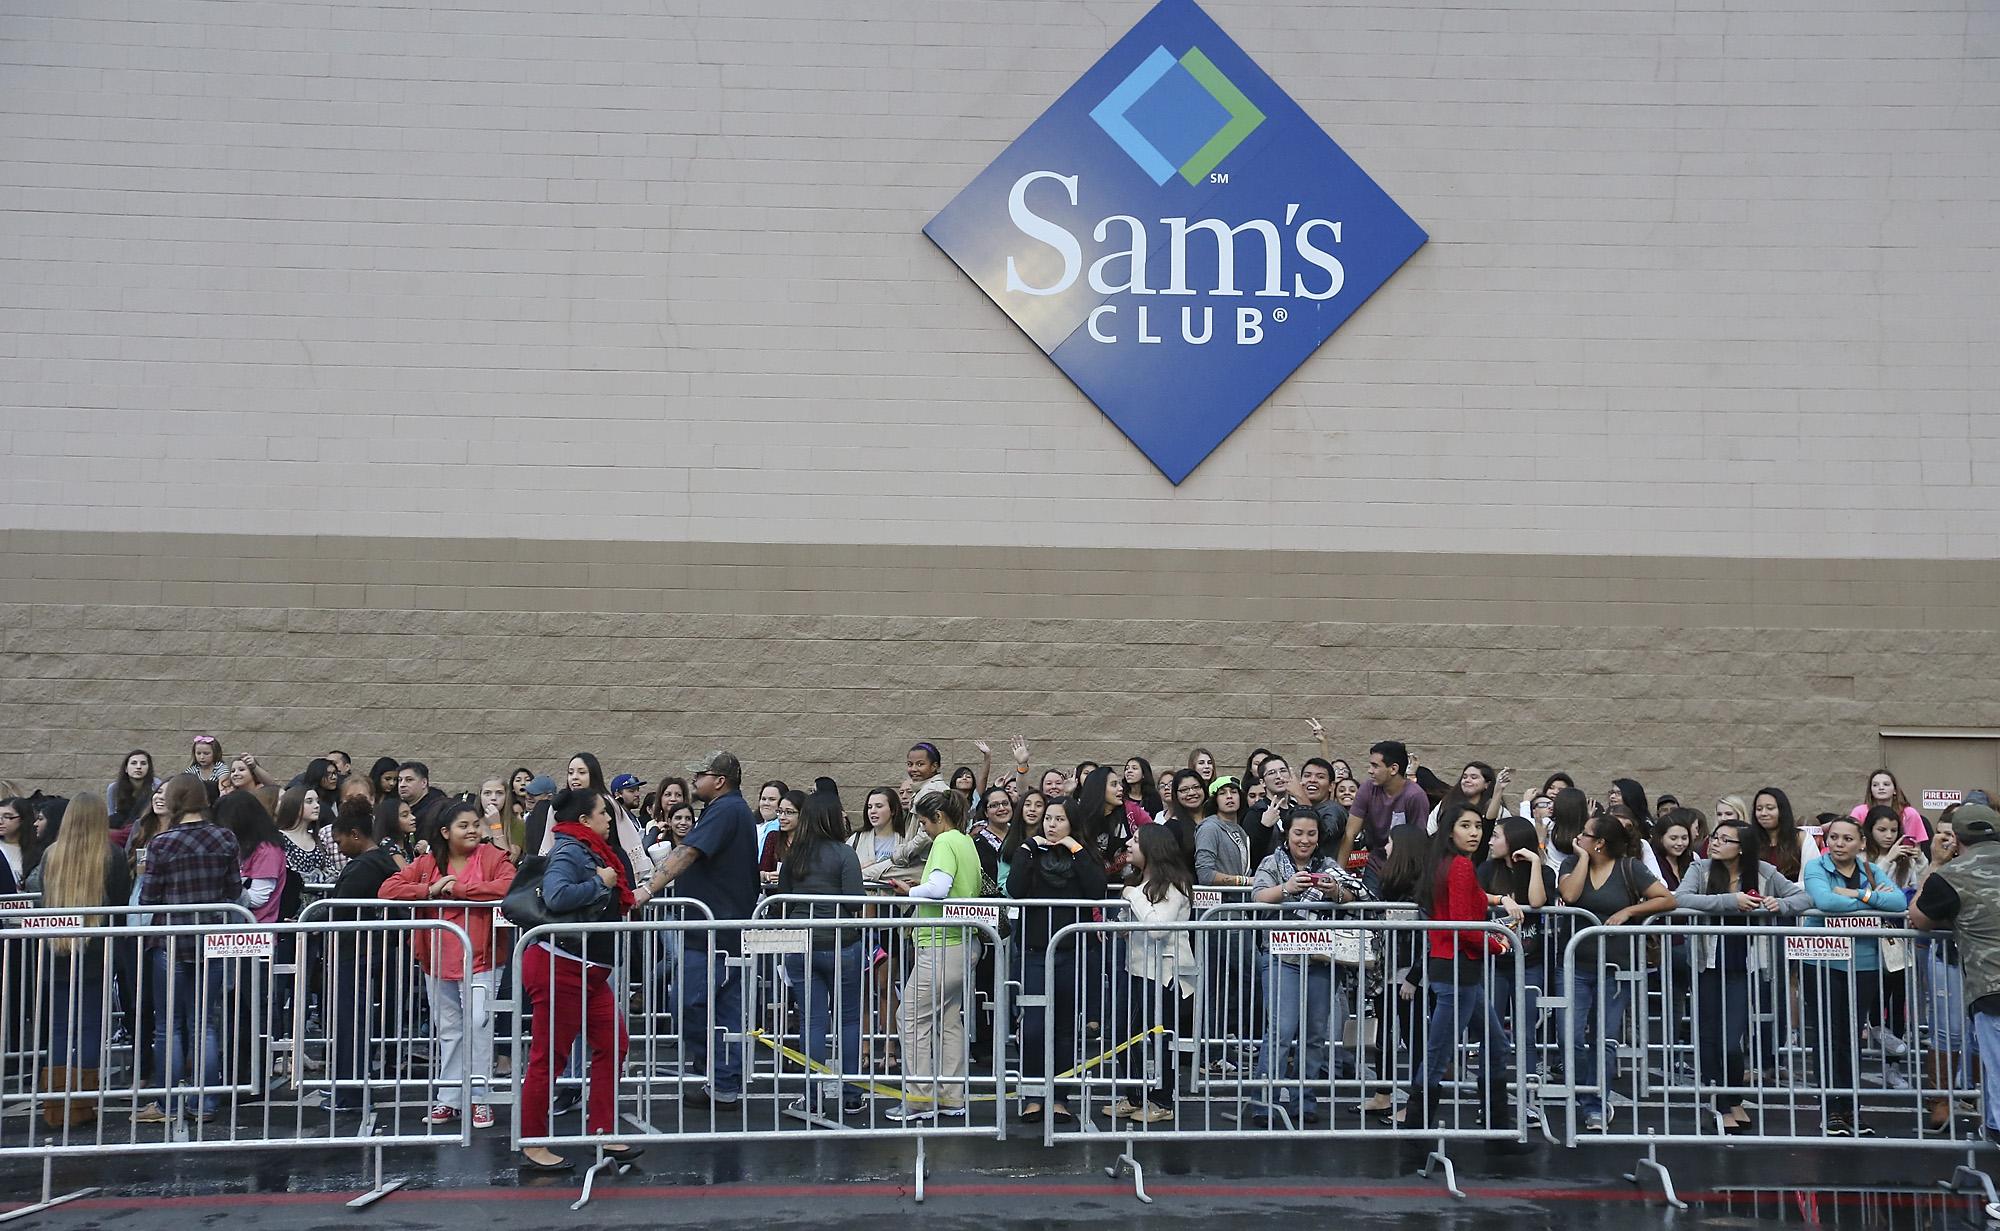 Walmart to shutter 63 Sam's Club locations